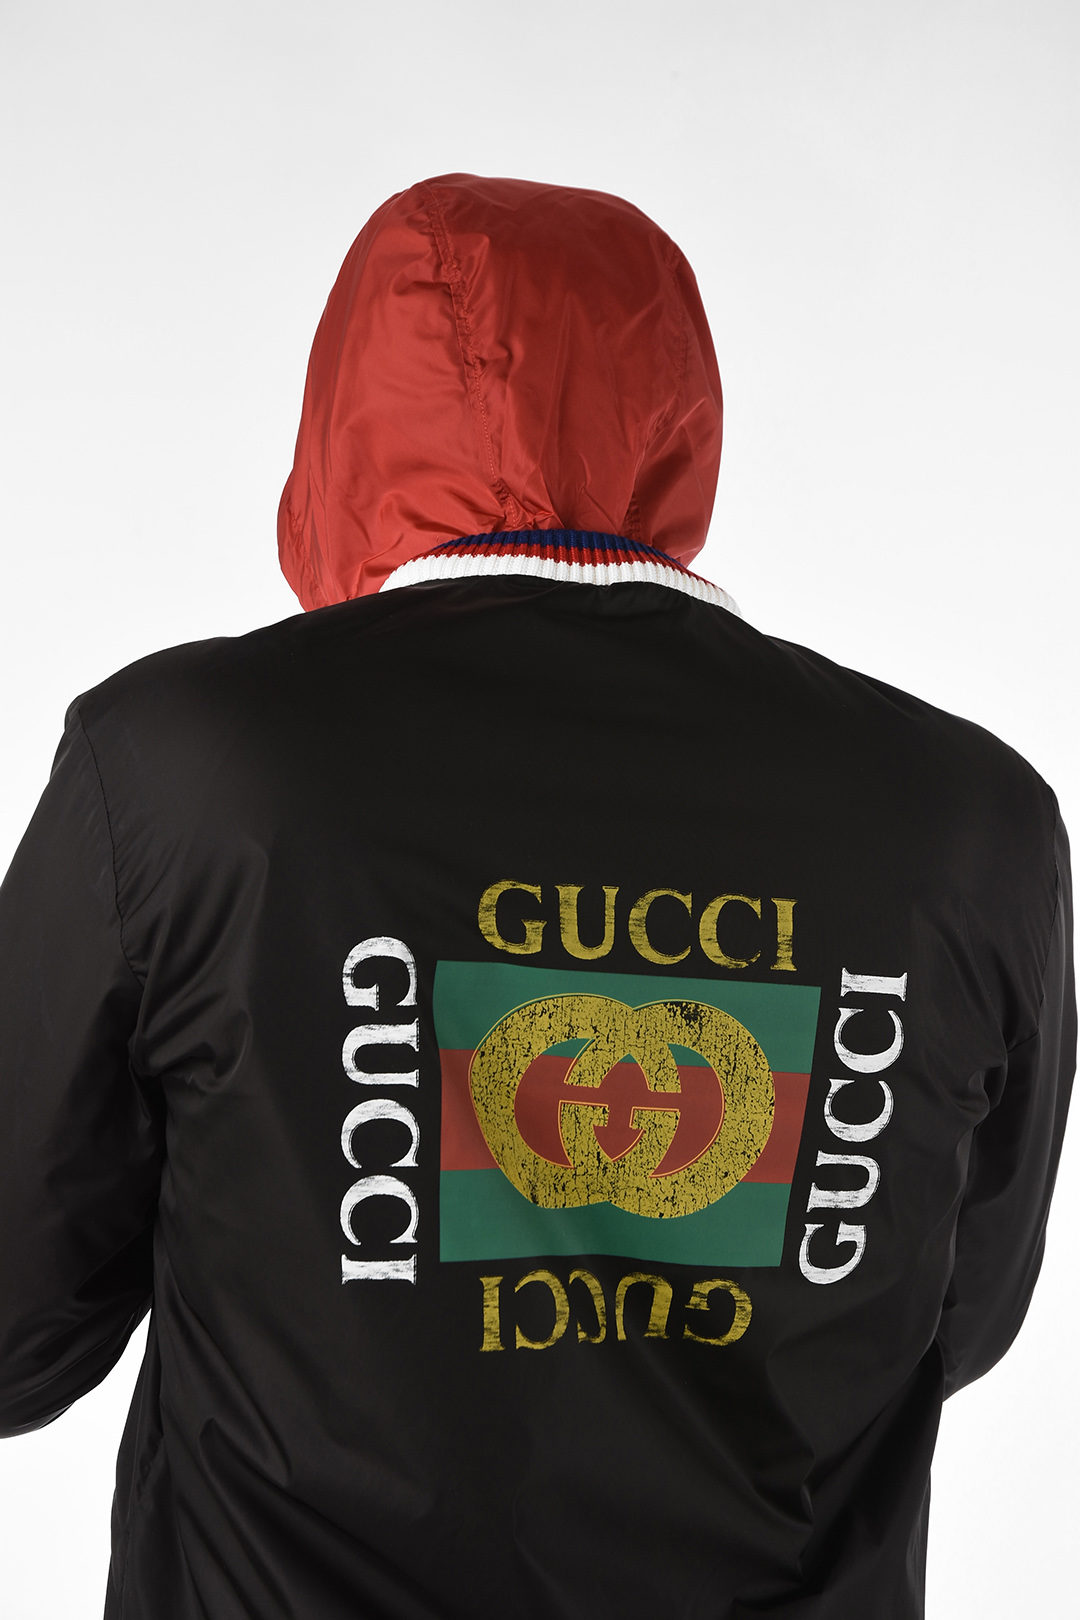 Gucci logo print jacket with hood men - Glamood Outlet